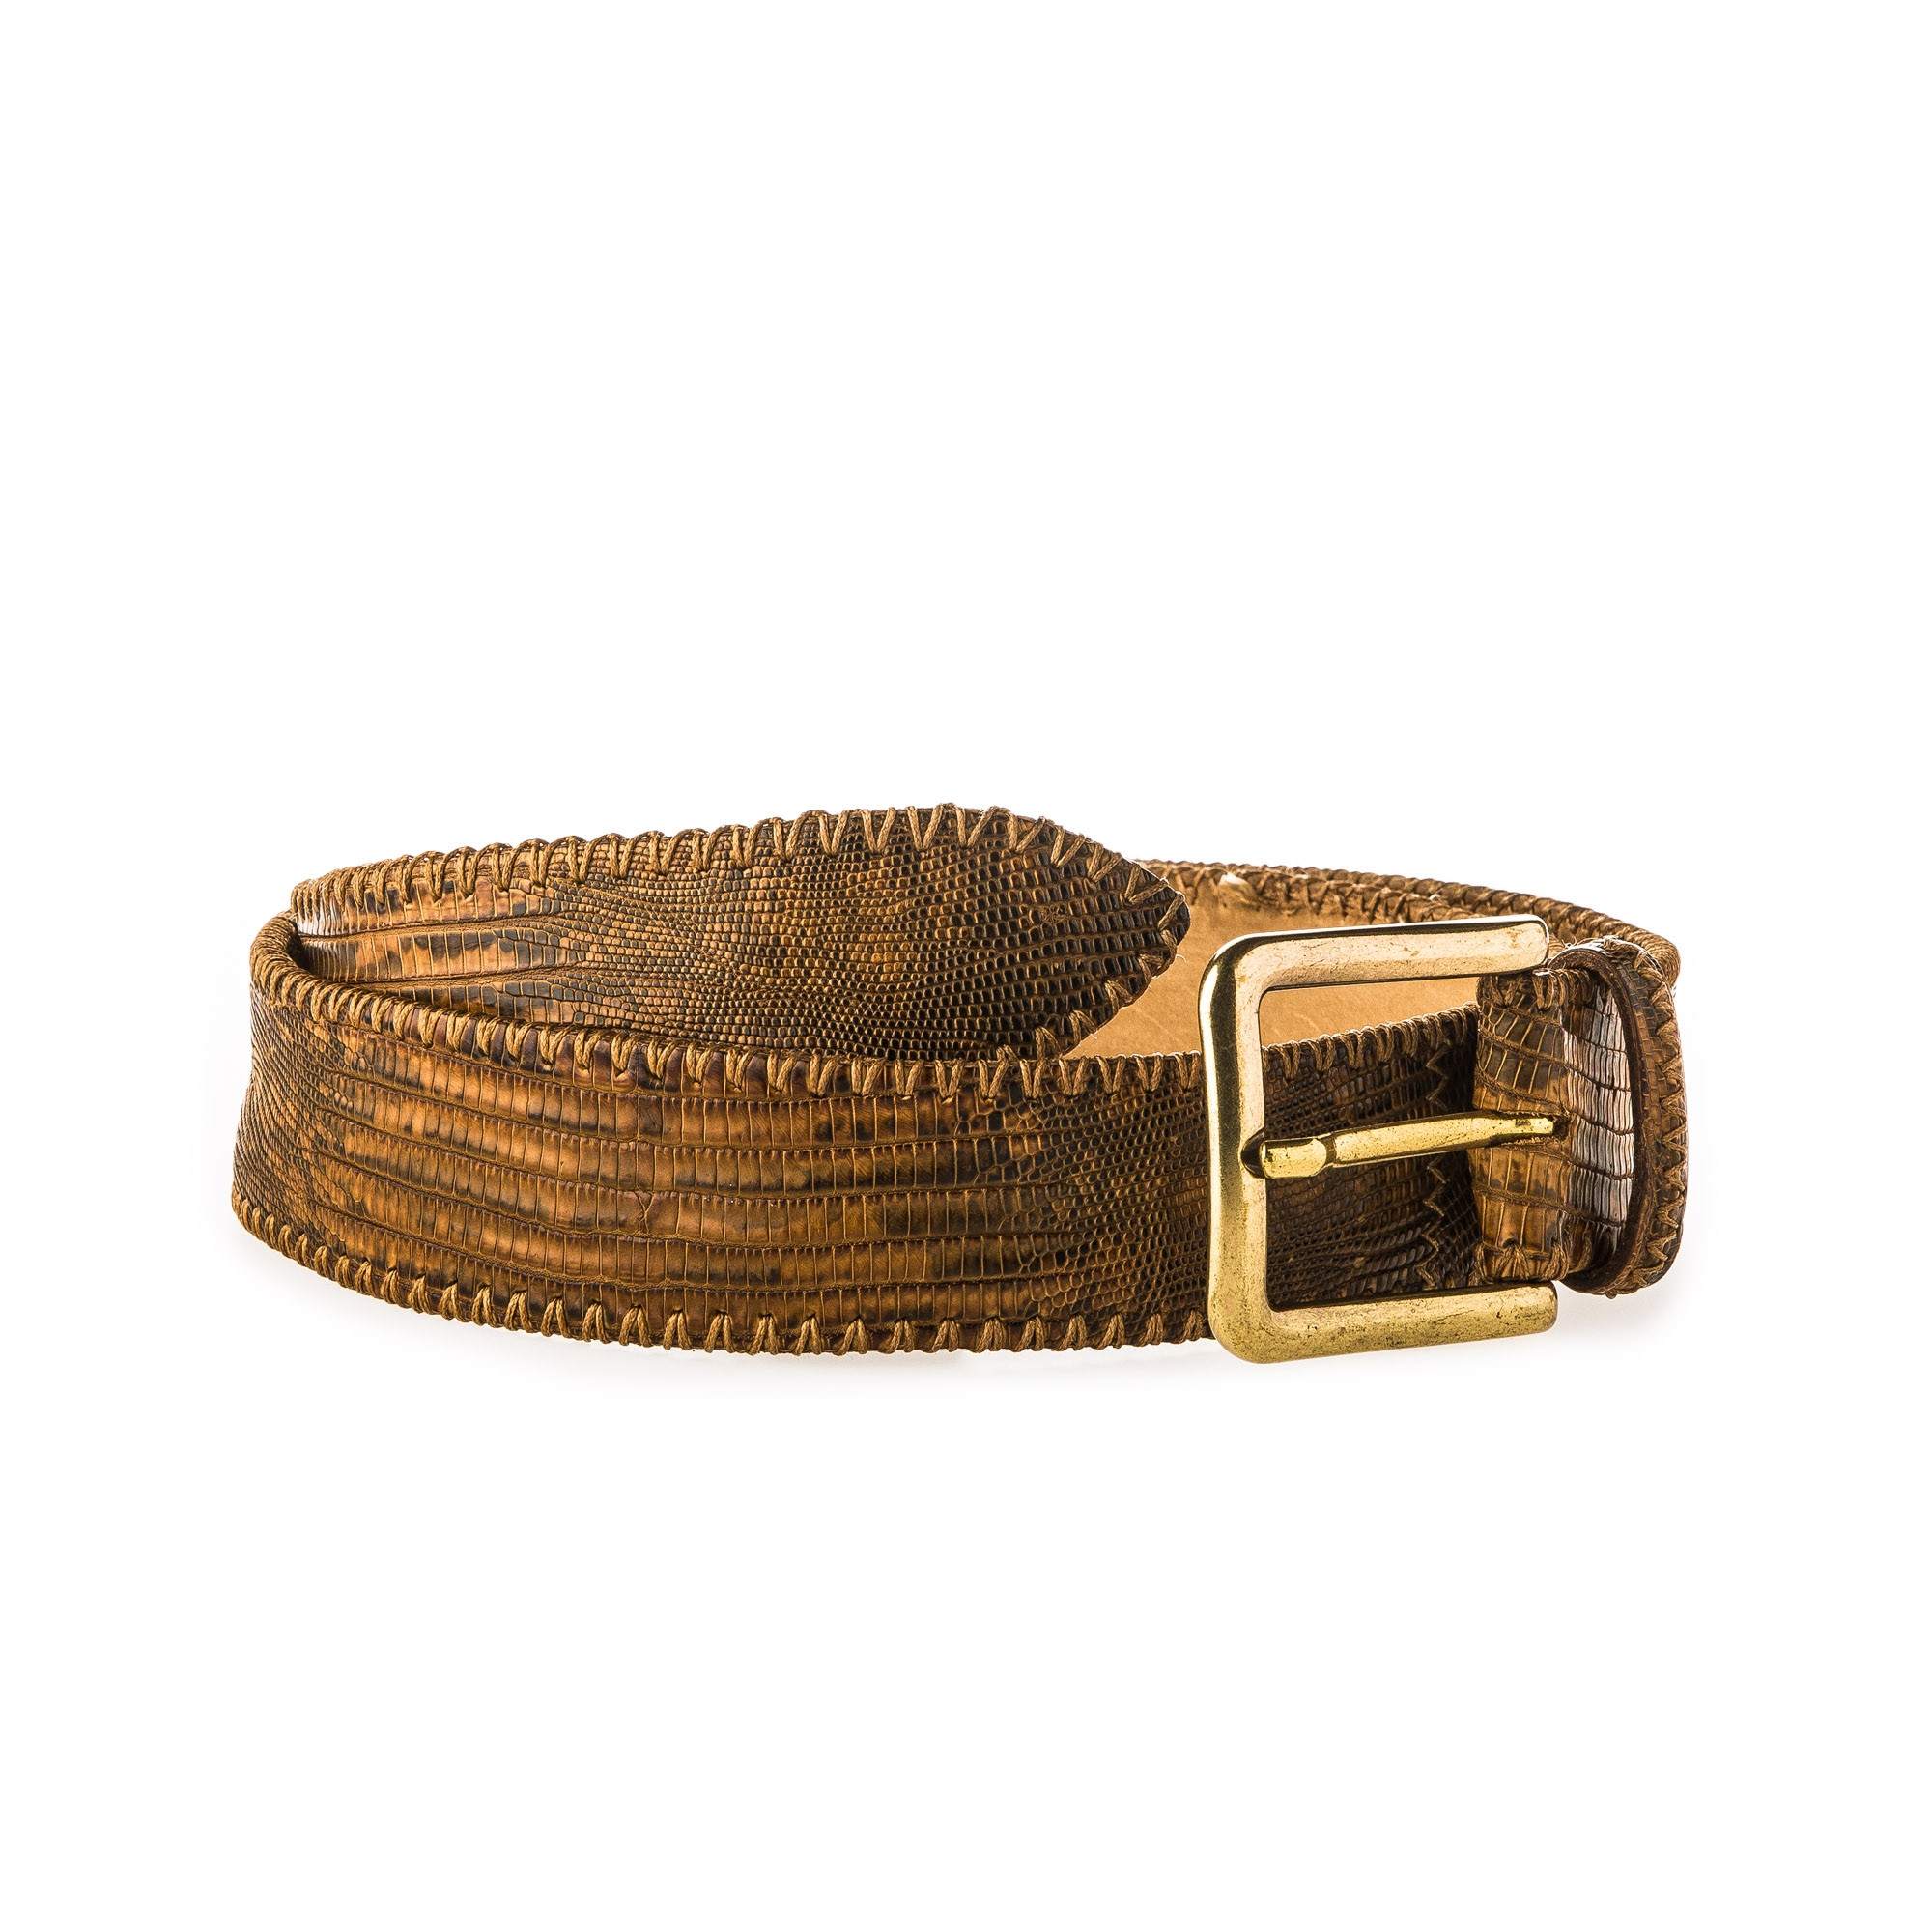 Post & Co. - Men's Lizard Leather Belt in Cognac